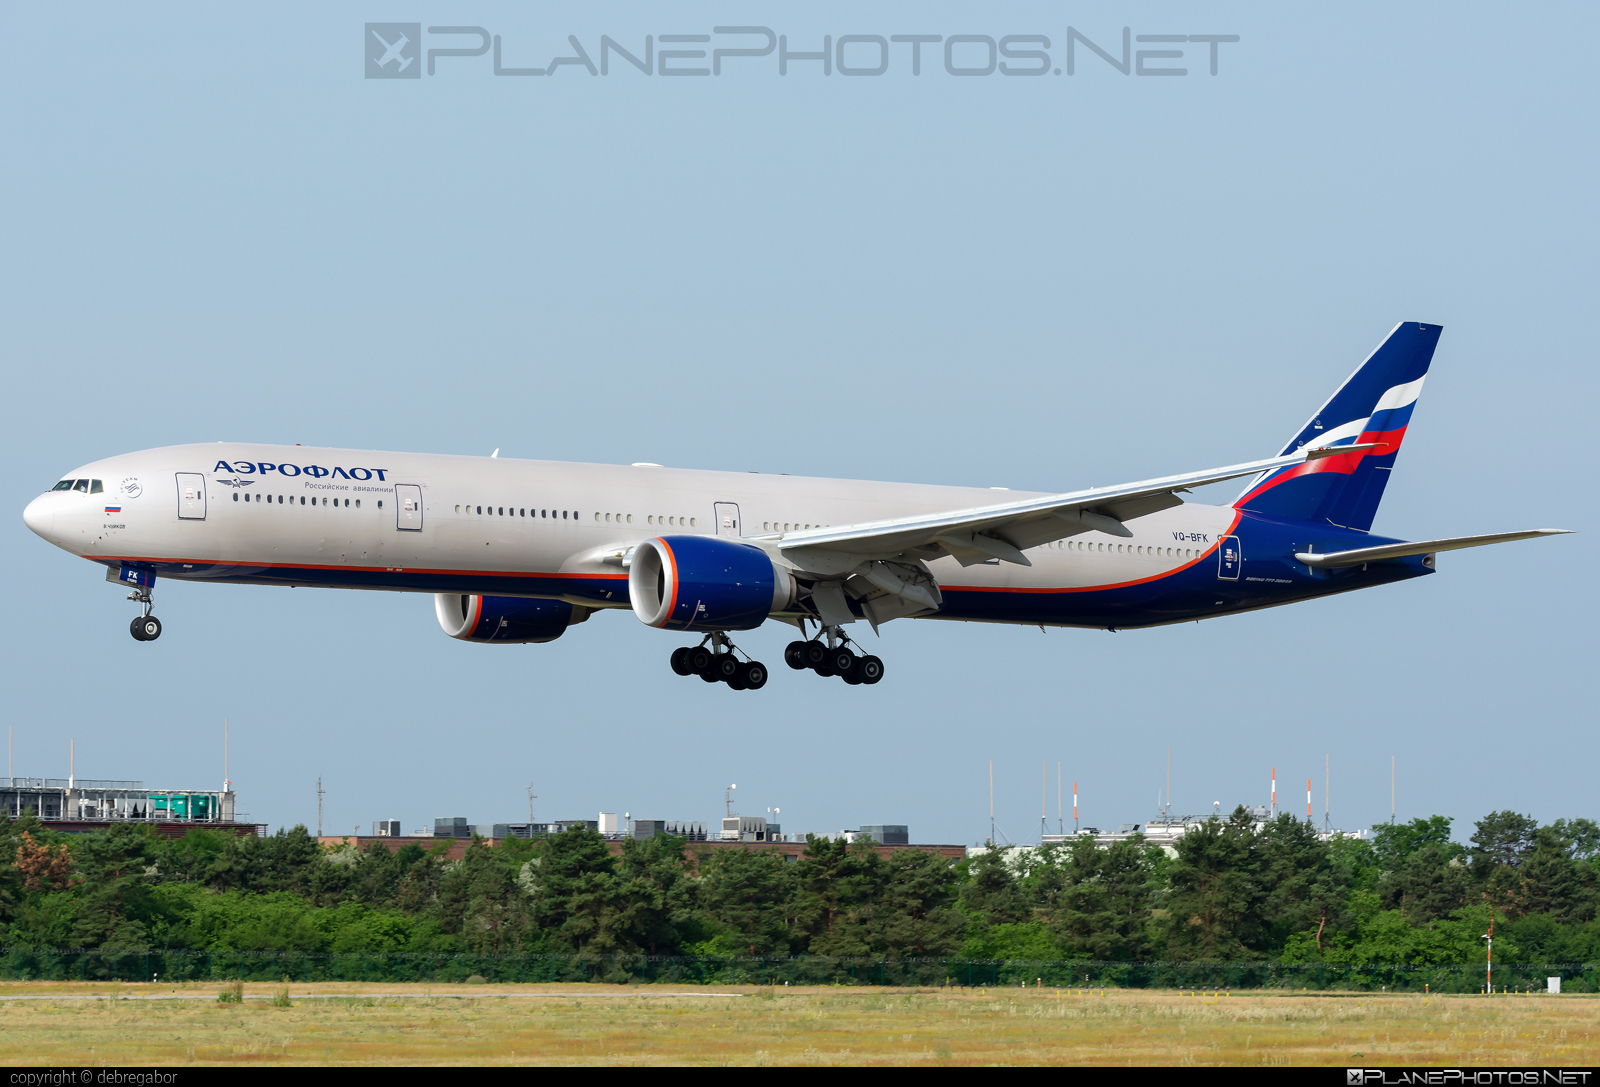 Boeing 777-300ER - VQ-BFK operated by Aeroflot #aeroflot #b777 #b777er #boeing #boeing777 #tripleseven